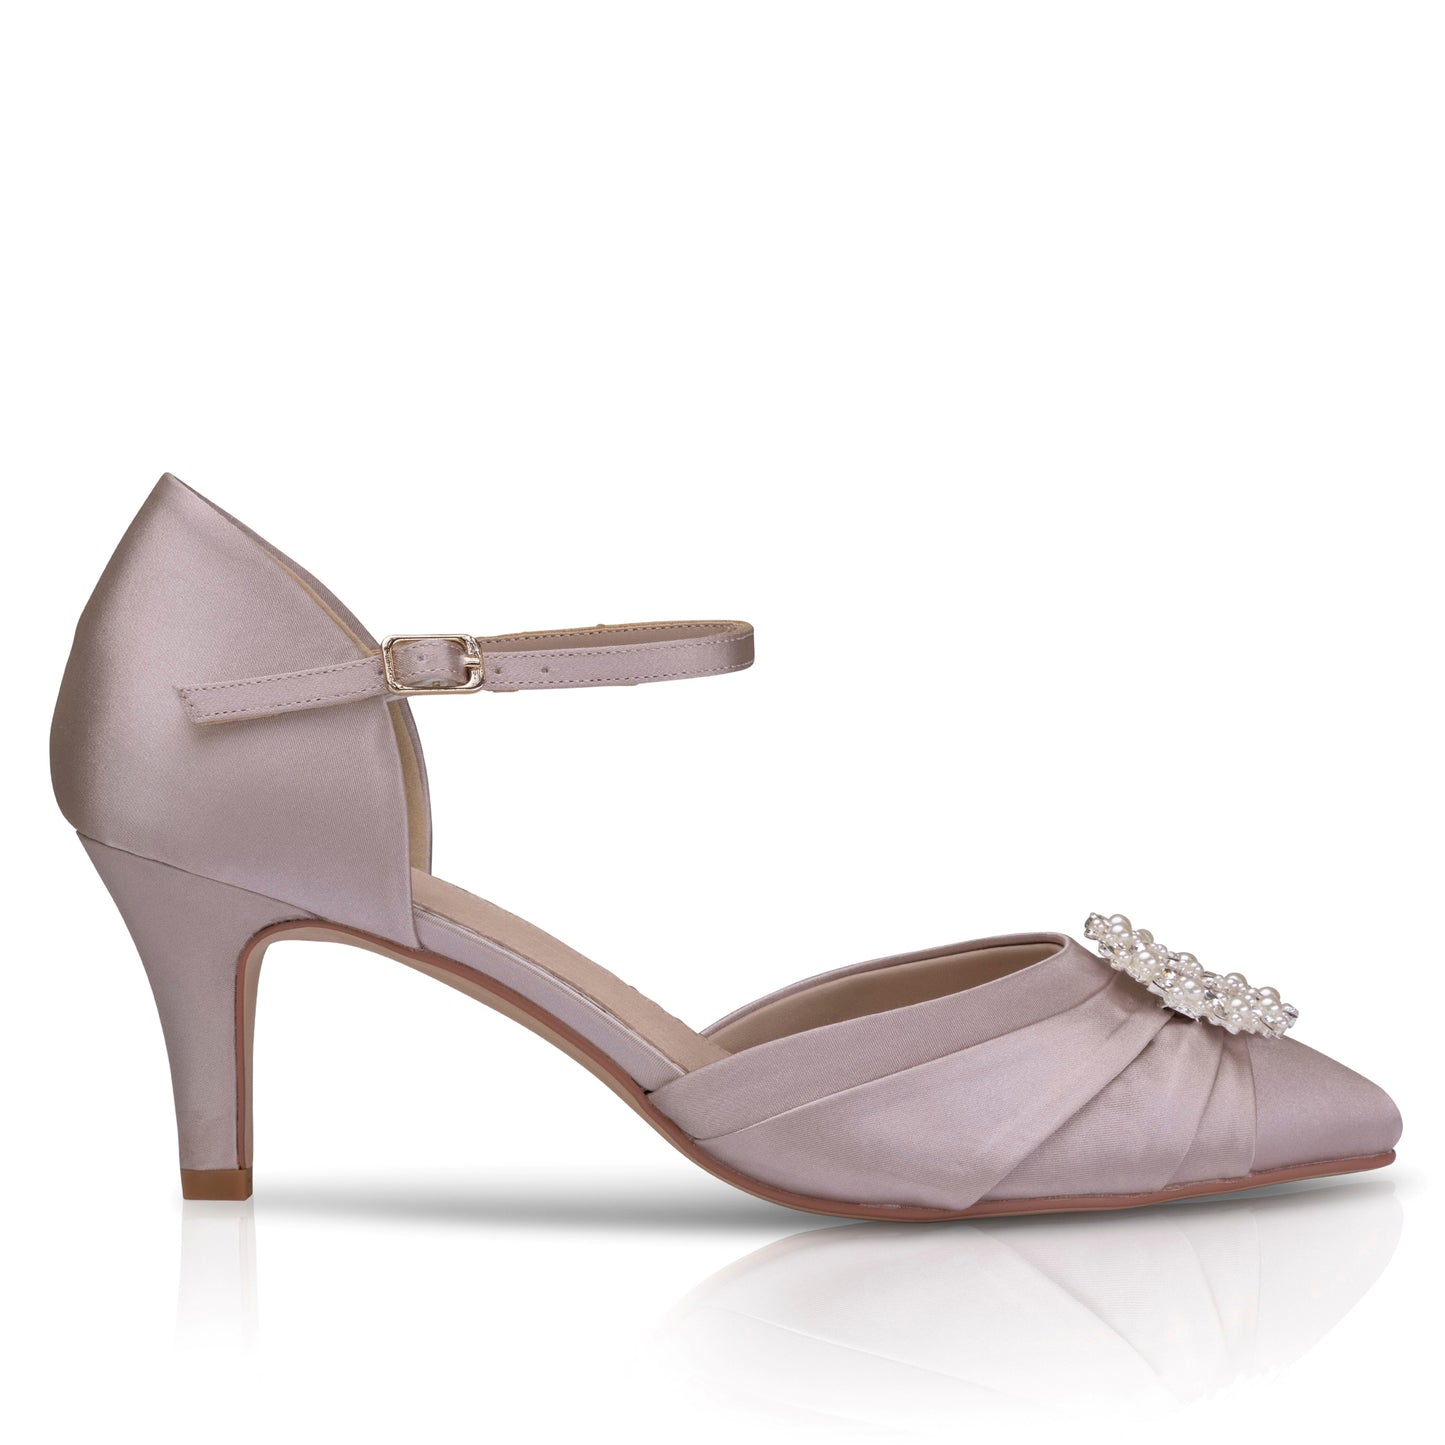 Kitty taupe heel with diamante trim